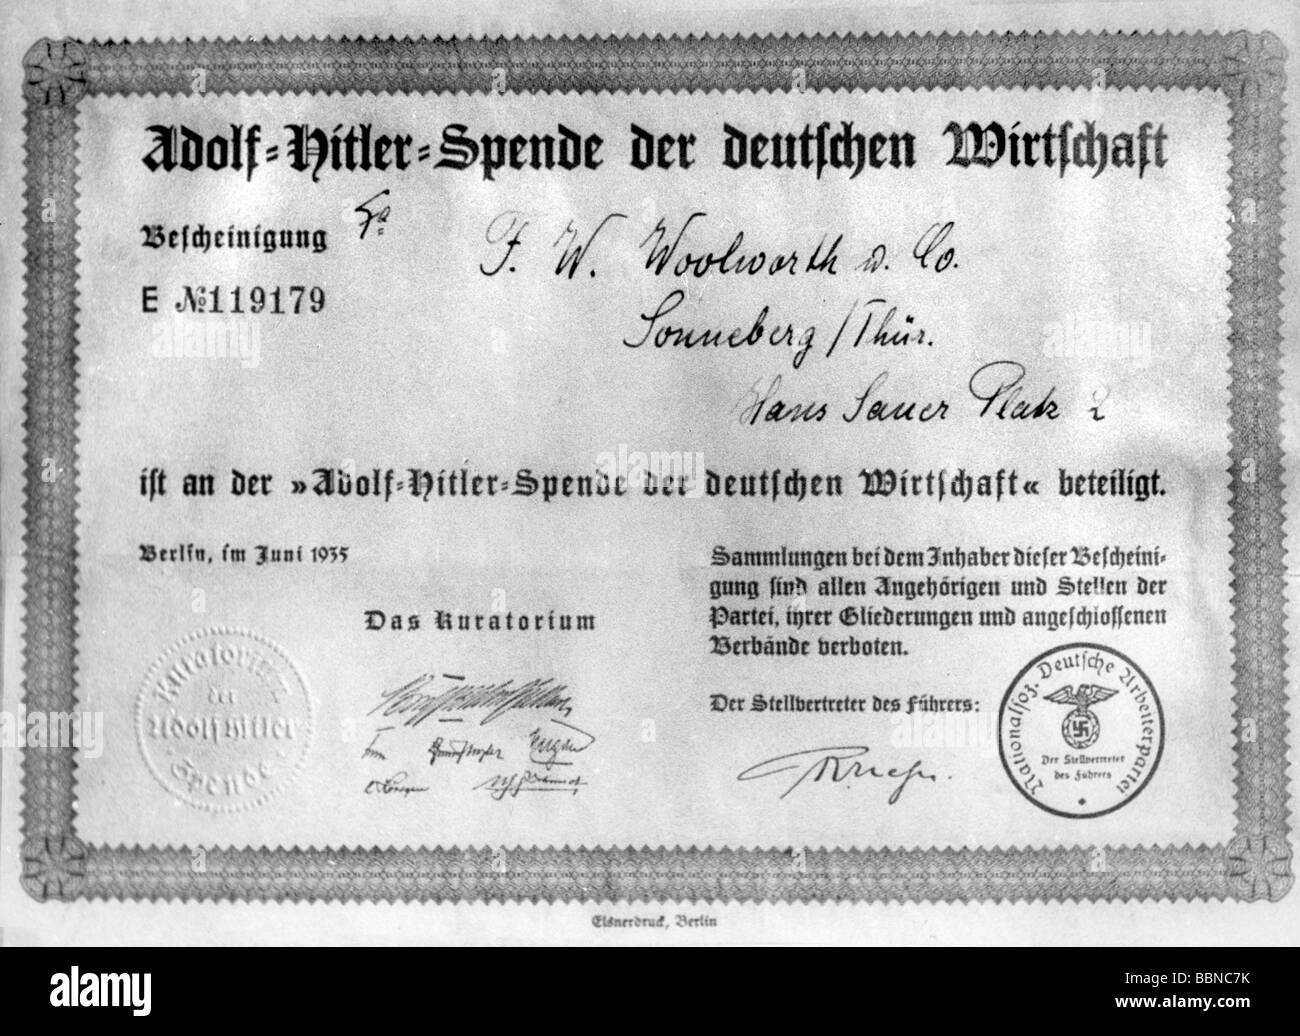 National Socialism, economy, 'Adolf-Hitler-Spende der deutschen Wirtschaft' (Adolf Hitler Donation of the German Industry', certificated to F. W. Woolworth Company, Sonneberg / Thuringia, Berlin, June 1935, Stock Photo